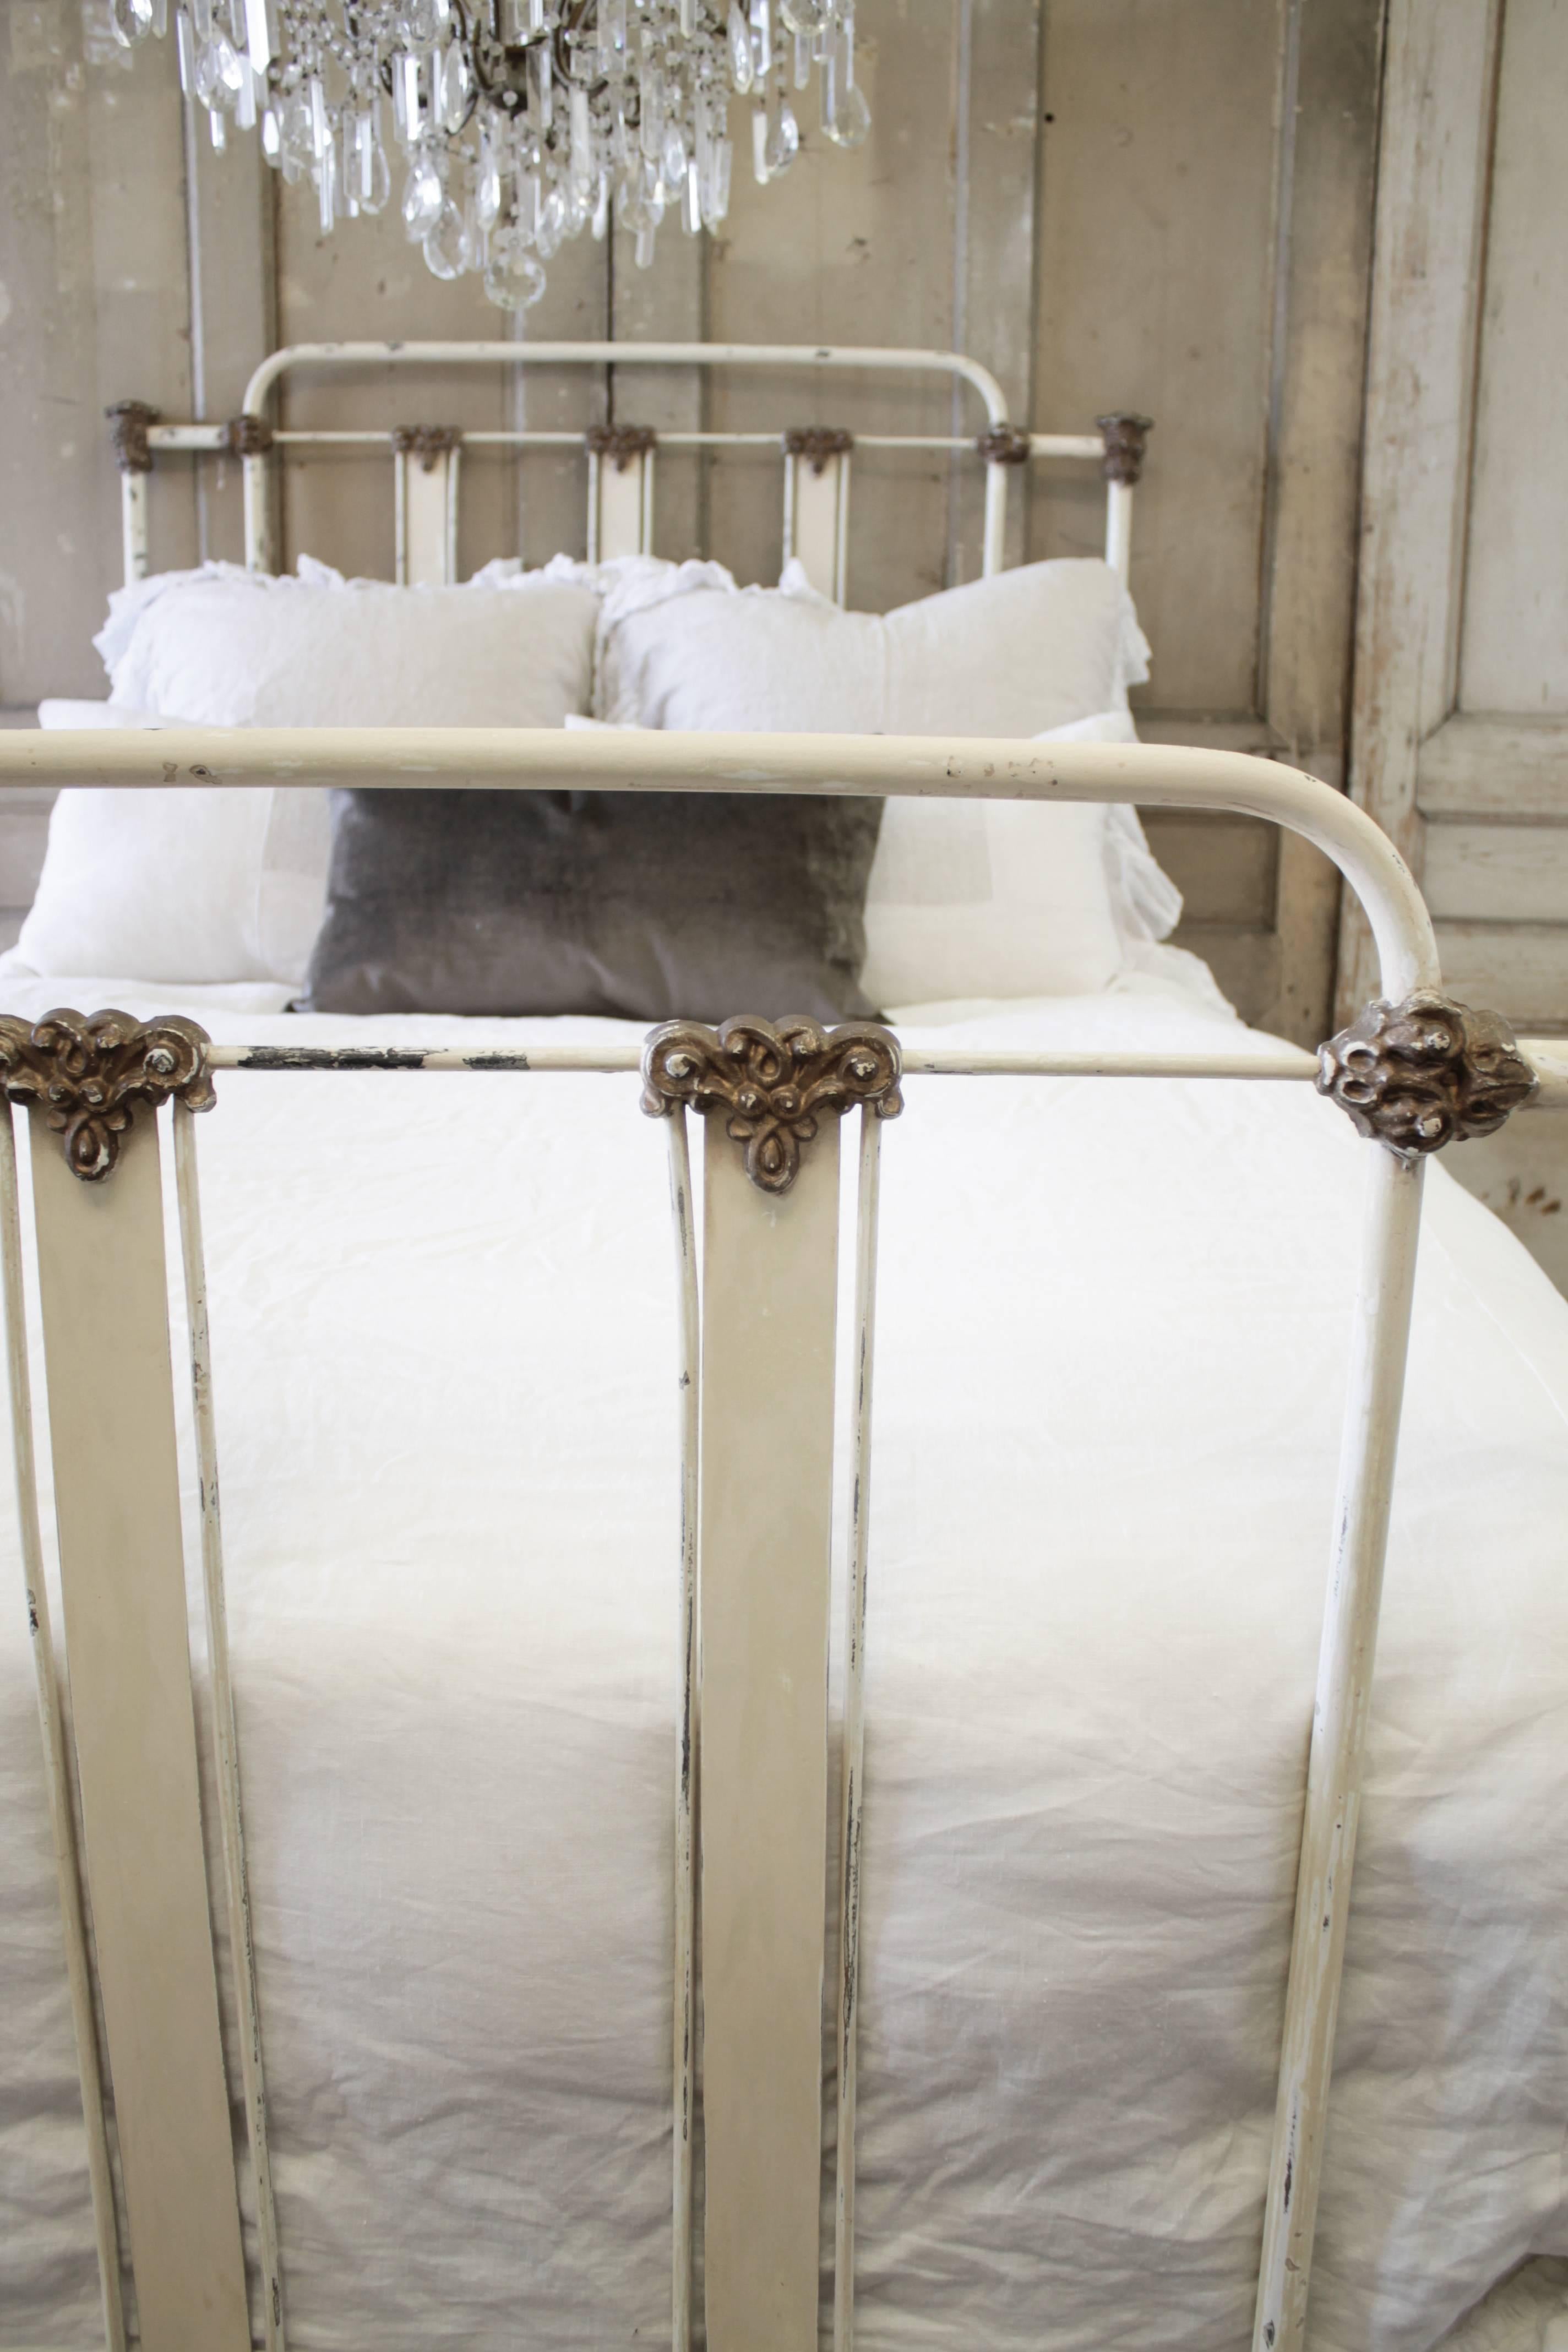 19th Century Antique Iron Farmhouse Bed Full Size In Distressed Condition In Brea, CA